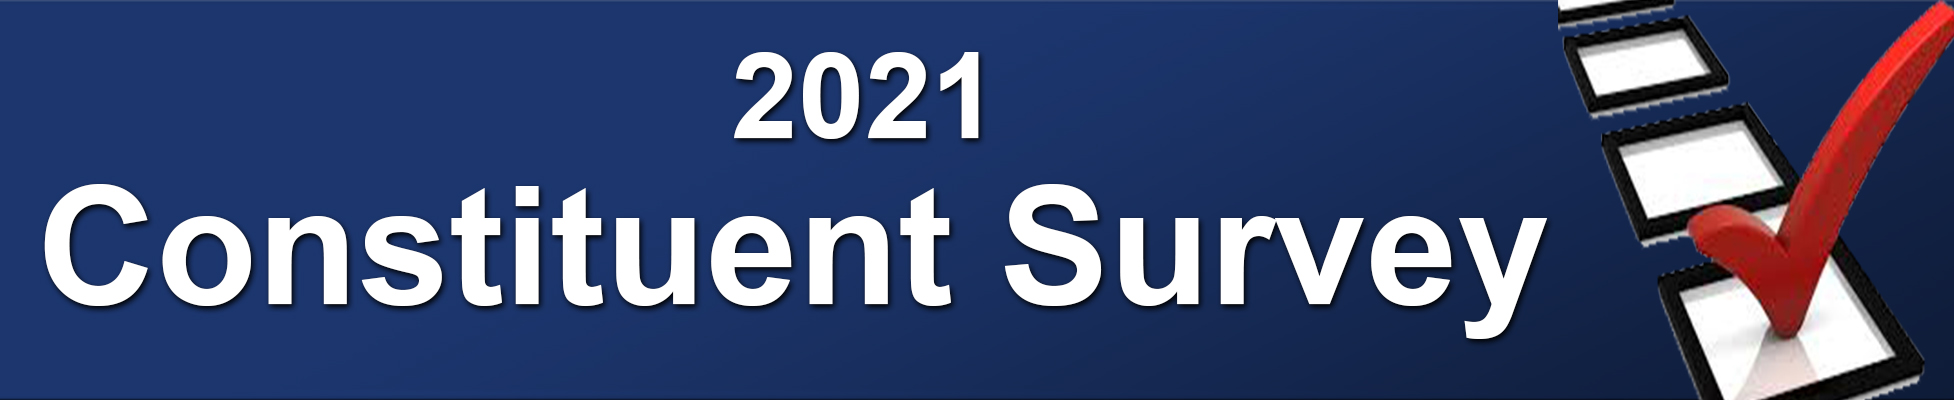 2021 Constituent Survey